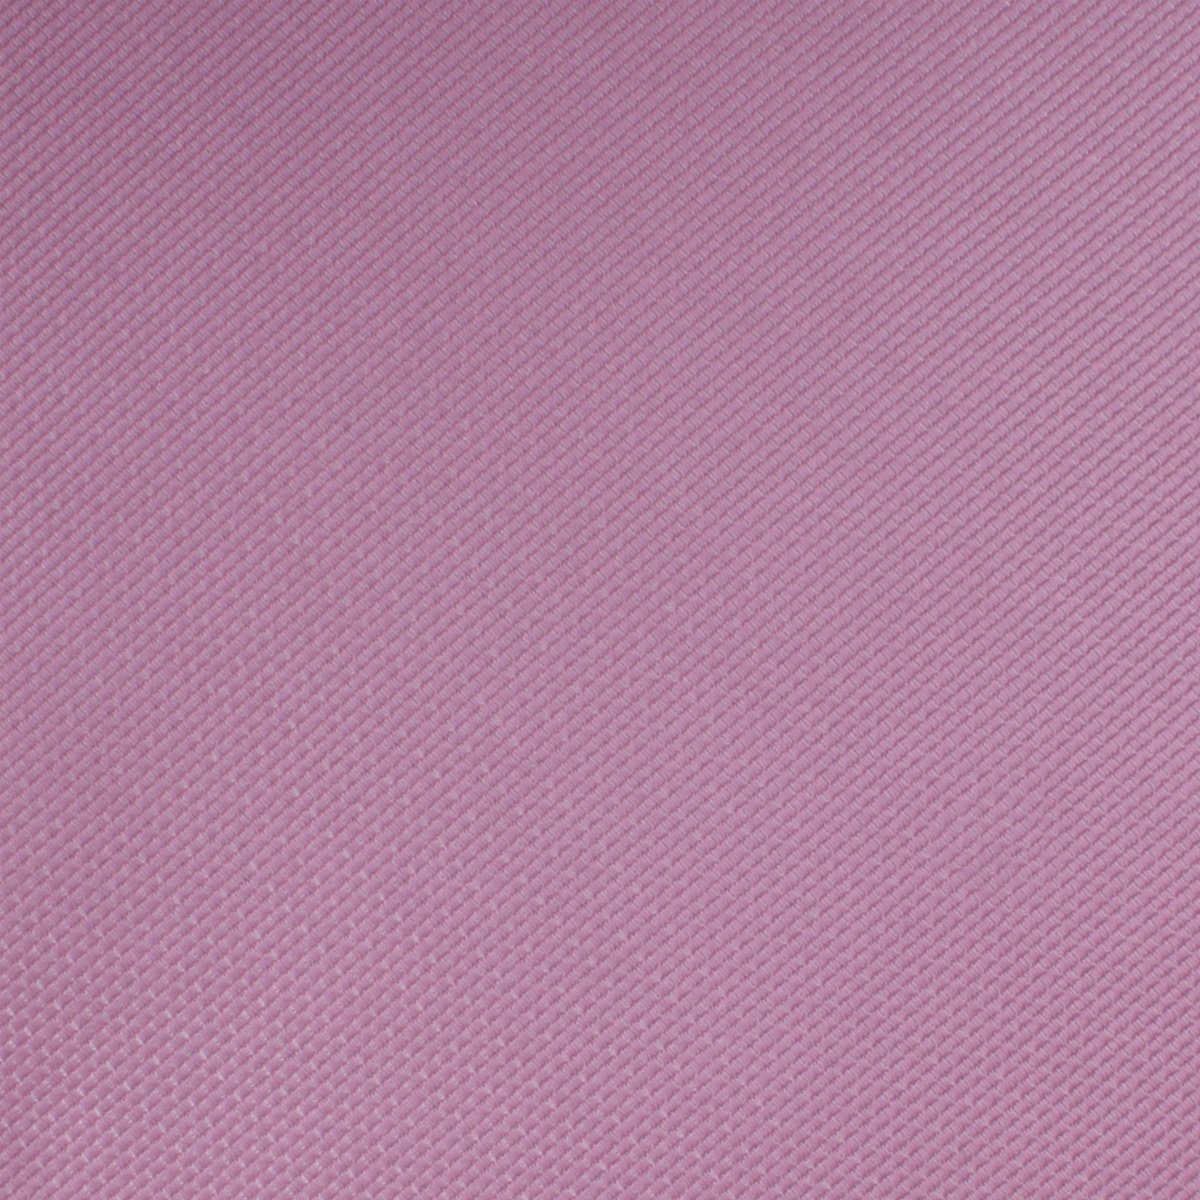 Deep Wisteria Purple Weave Skinny Tie Fabric